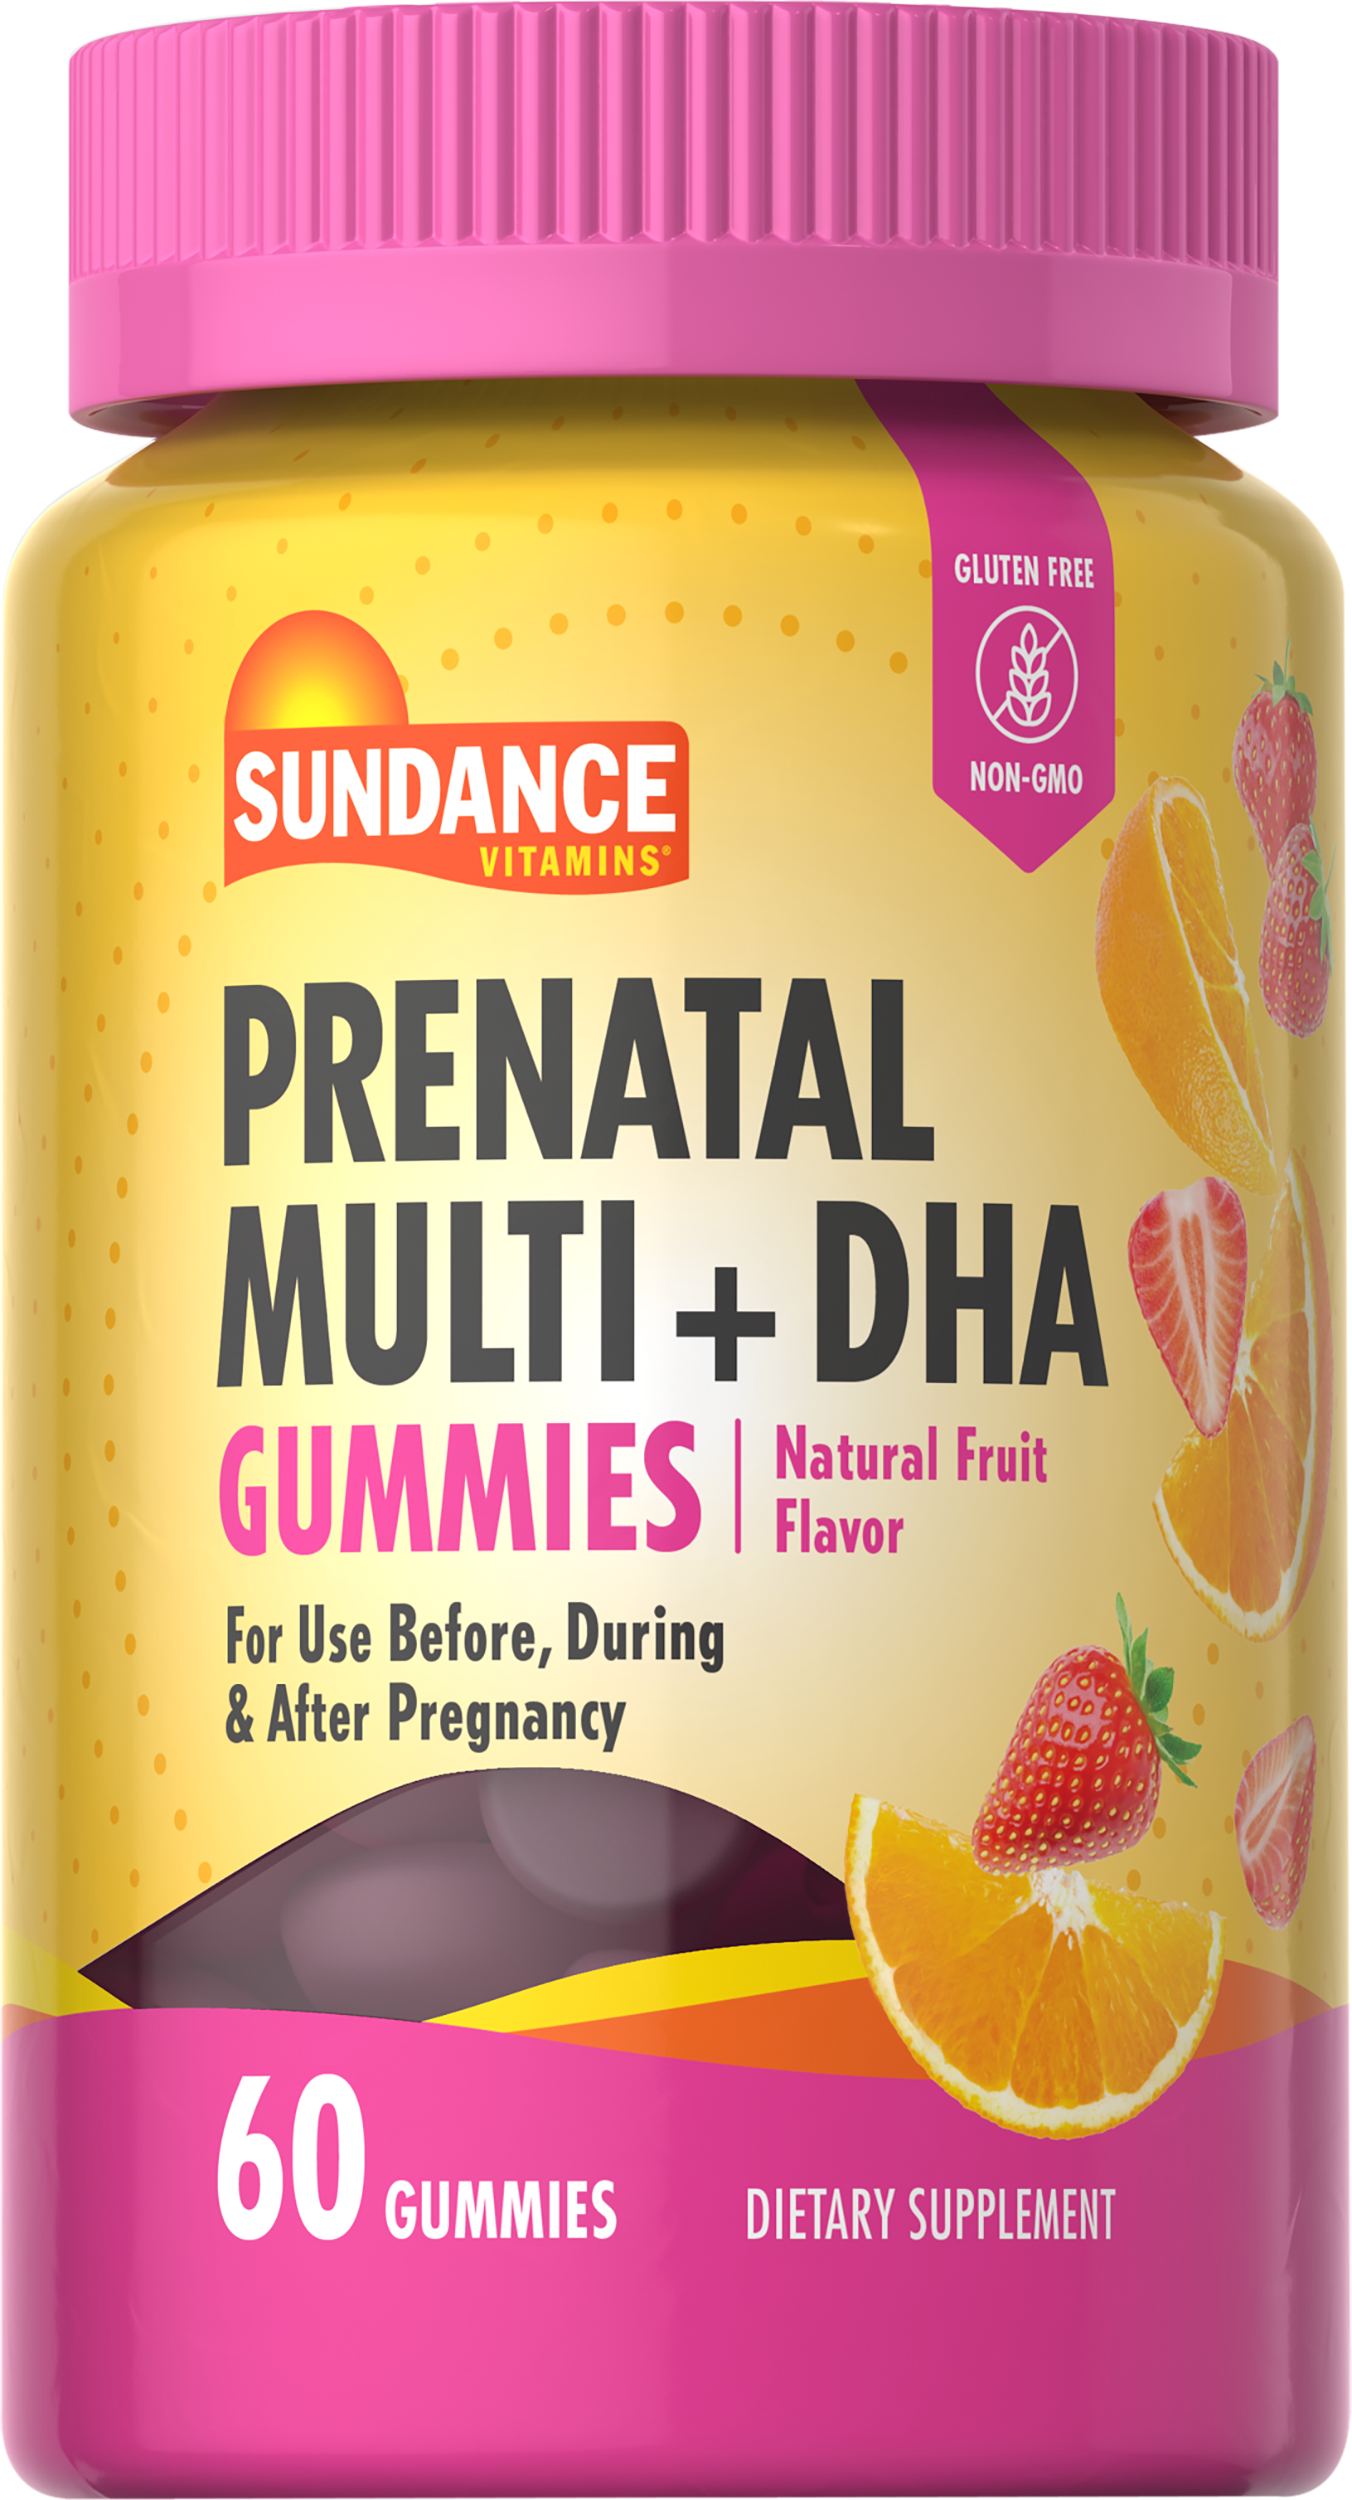 Prenatal Multivitamin With DHA